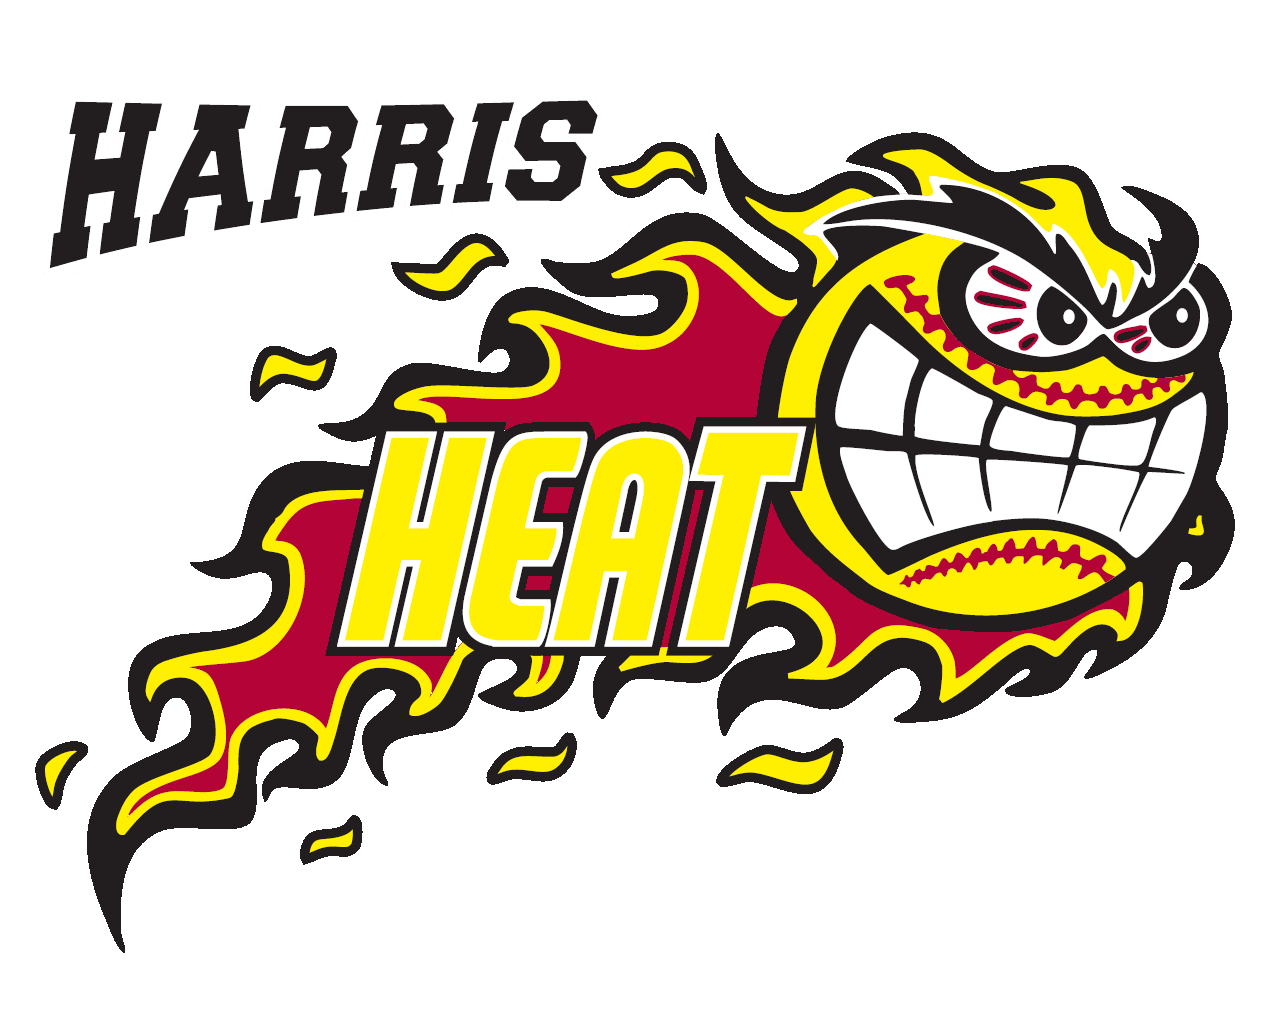 Baseball and Softball Logo - Harris Heat Tourney. Harris Baseball Softball, Inc